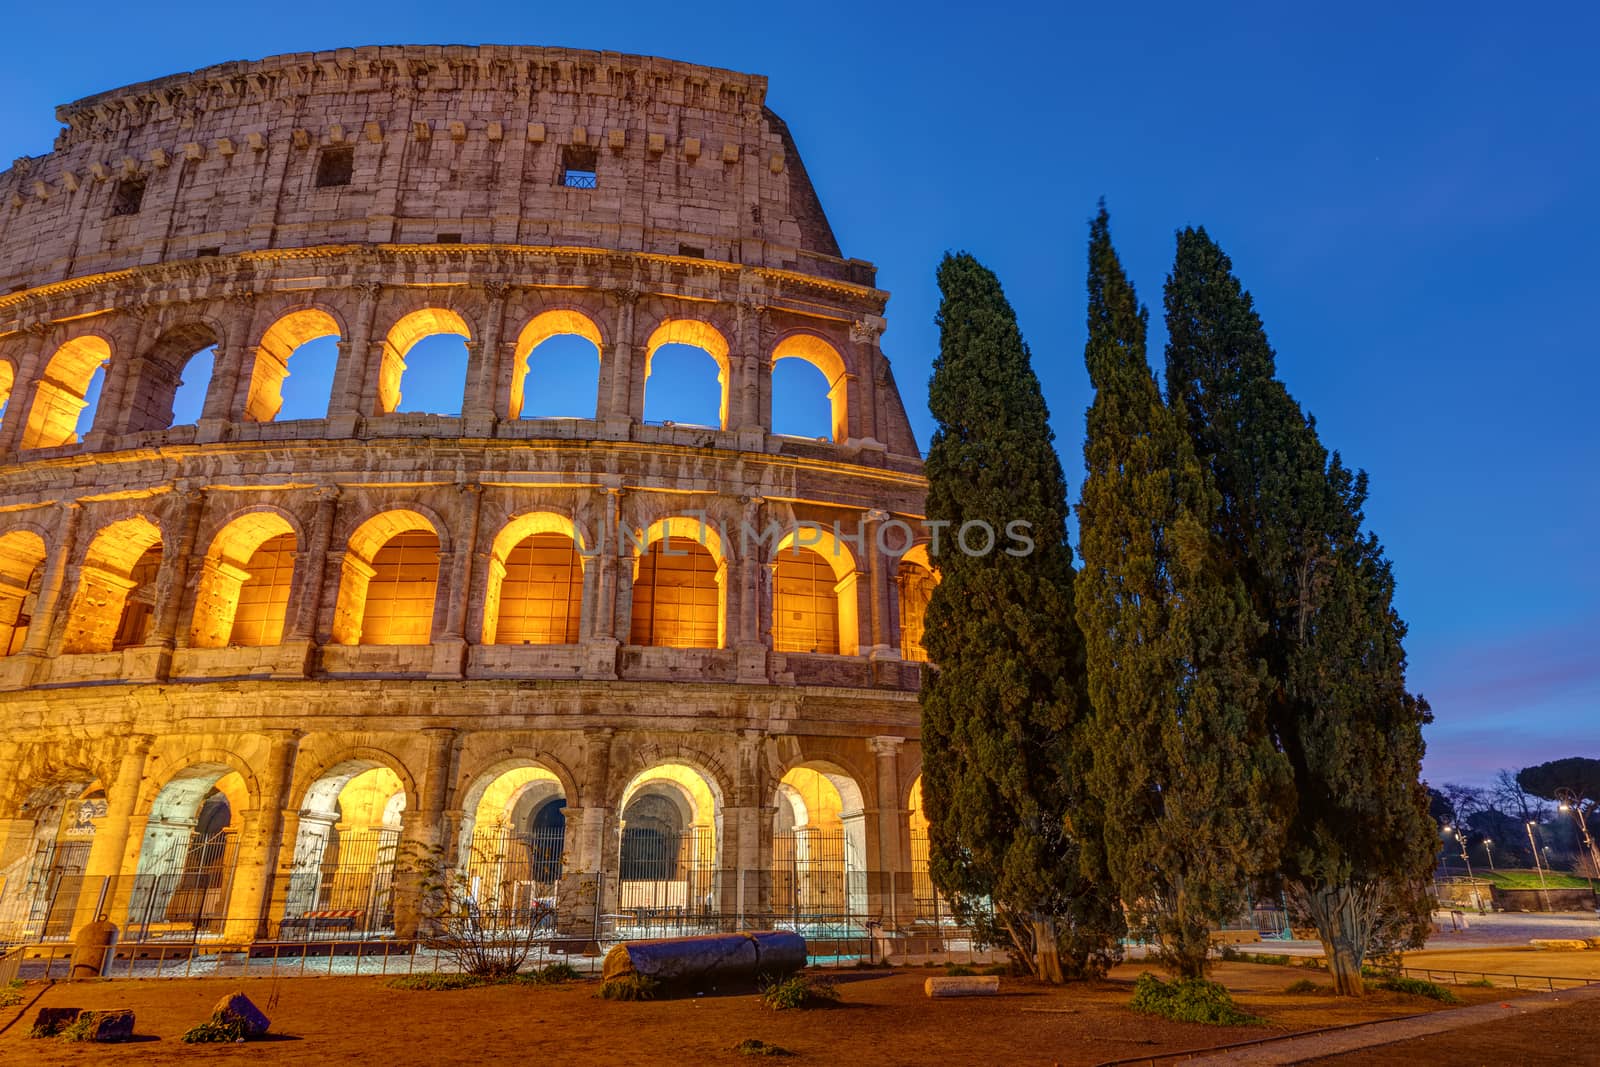 The illuminated Colosseum by elxeneize